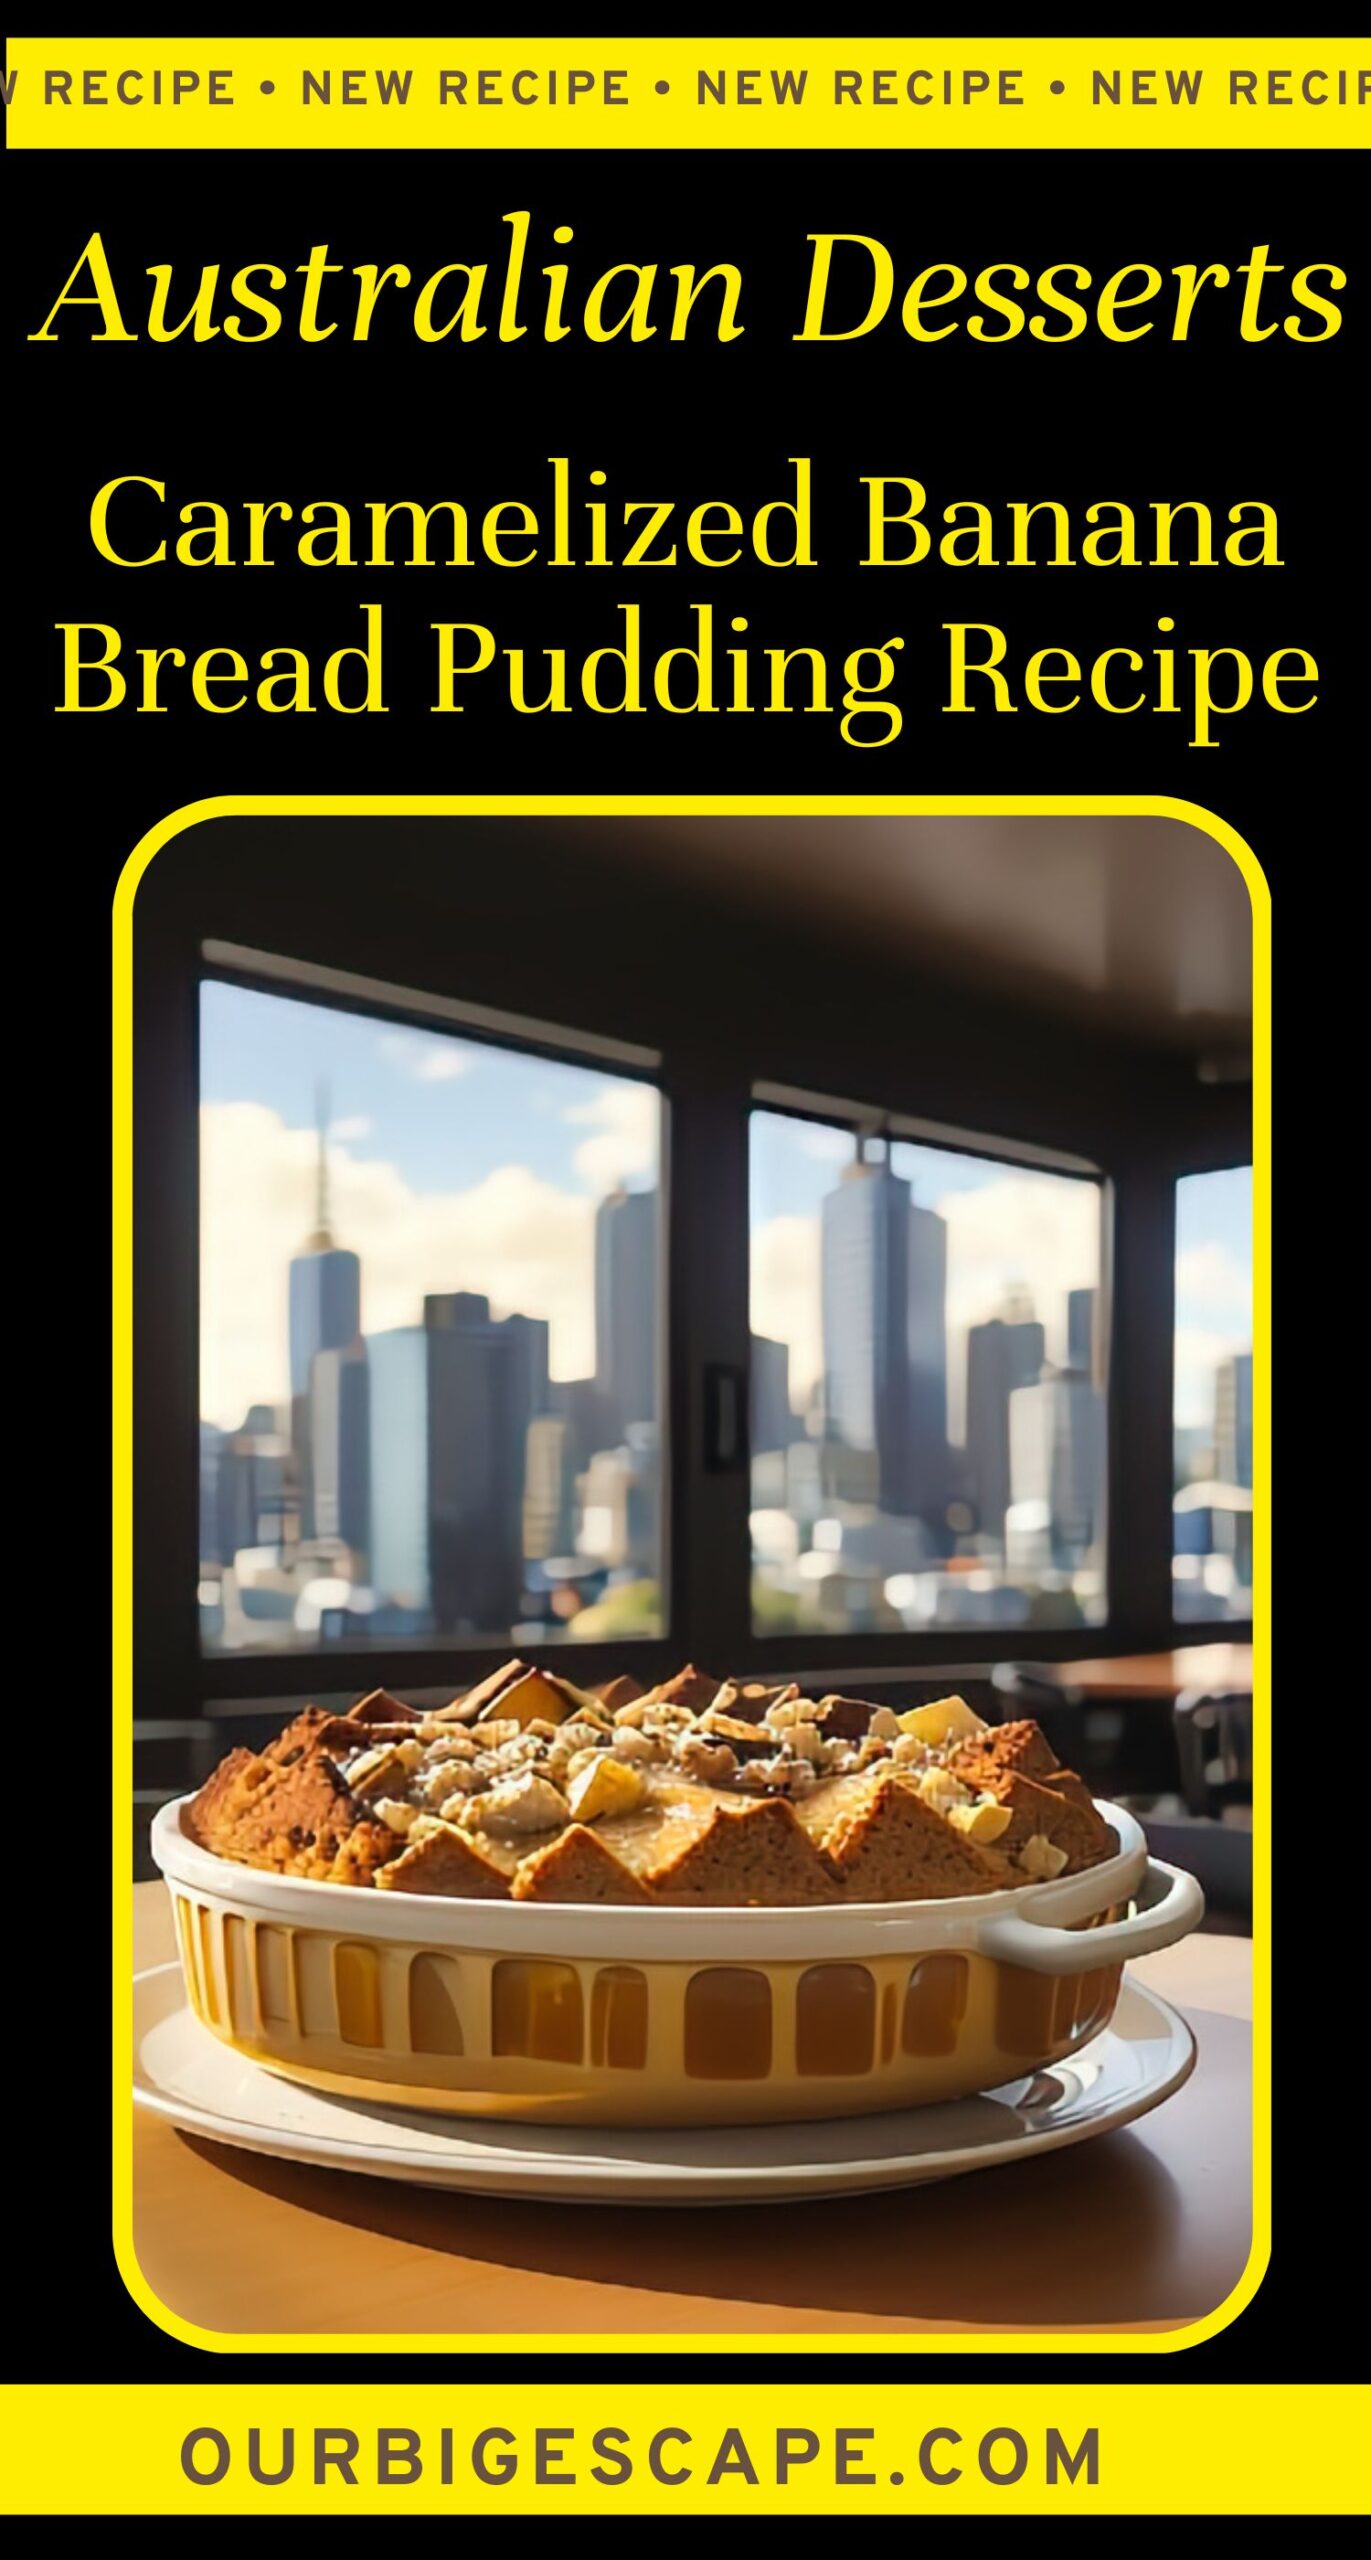 19. Australian Caramelized Banana Bread Pudding Recipe